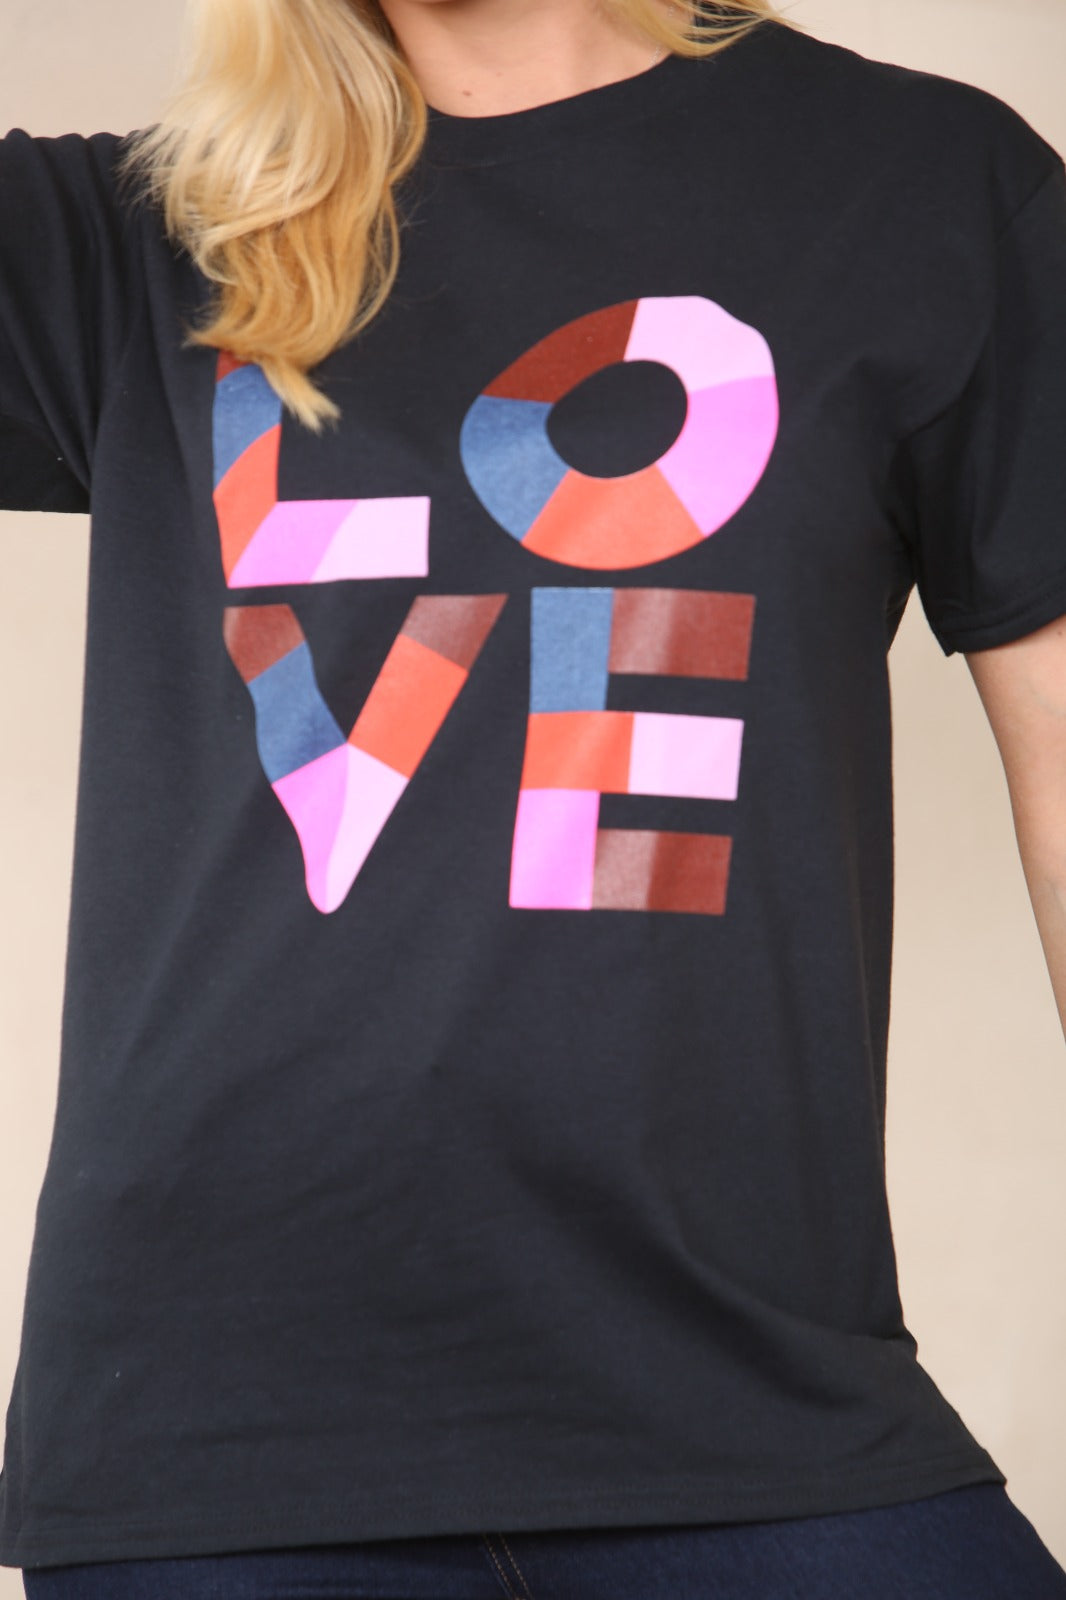 Love Mosaic Graphic Short Sleeve T-Shirt